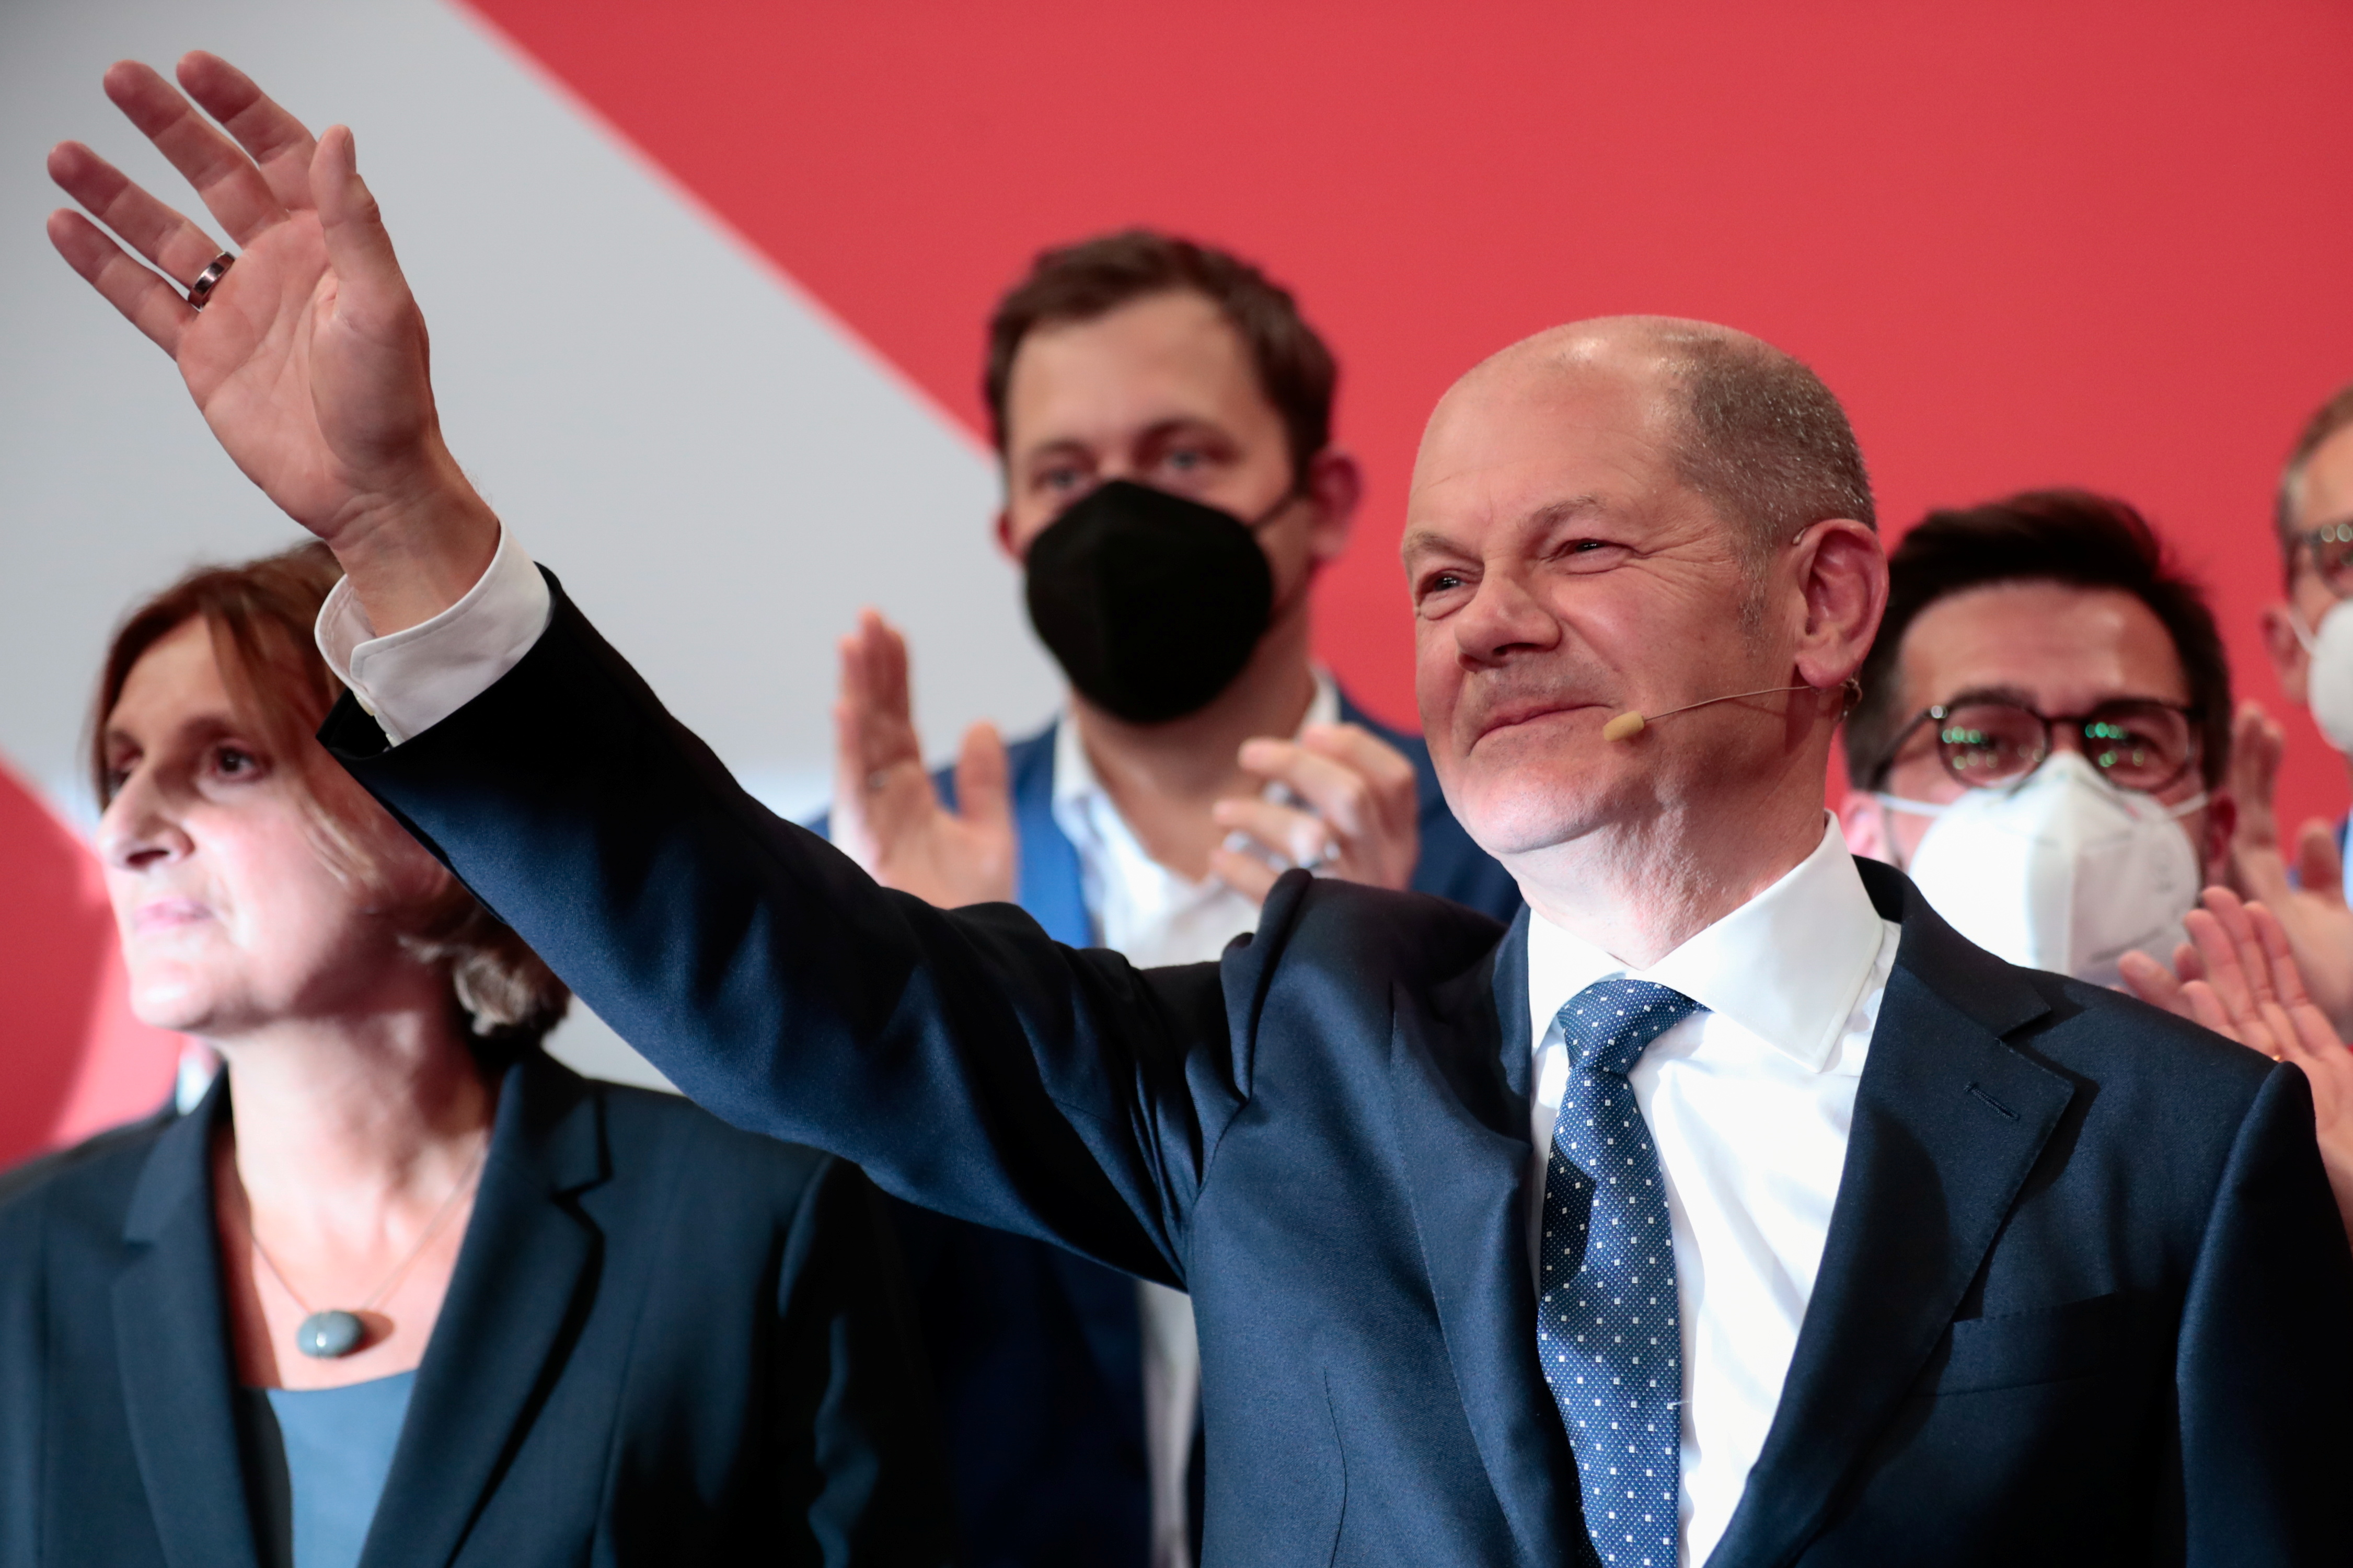 El líder del partido Socialdemócrata (SPD) Olaf Scholz 